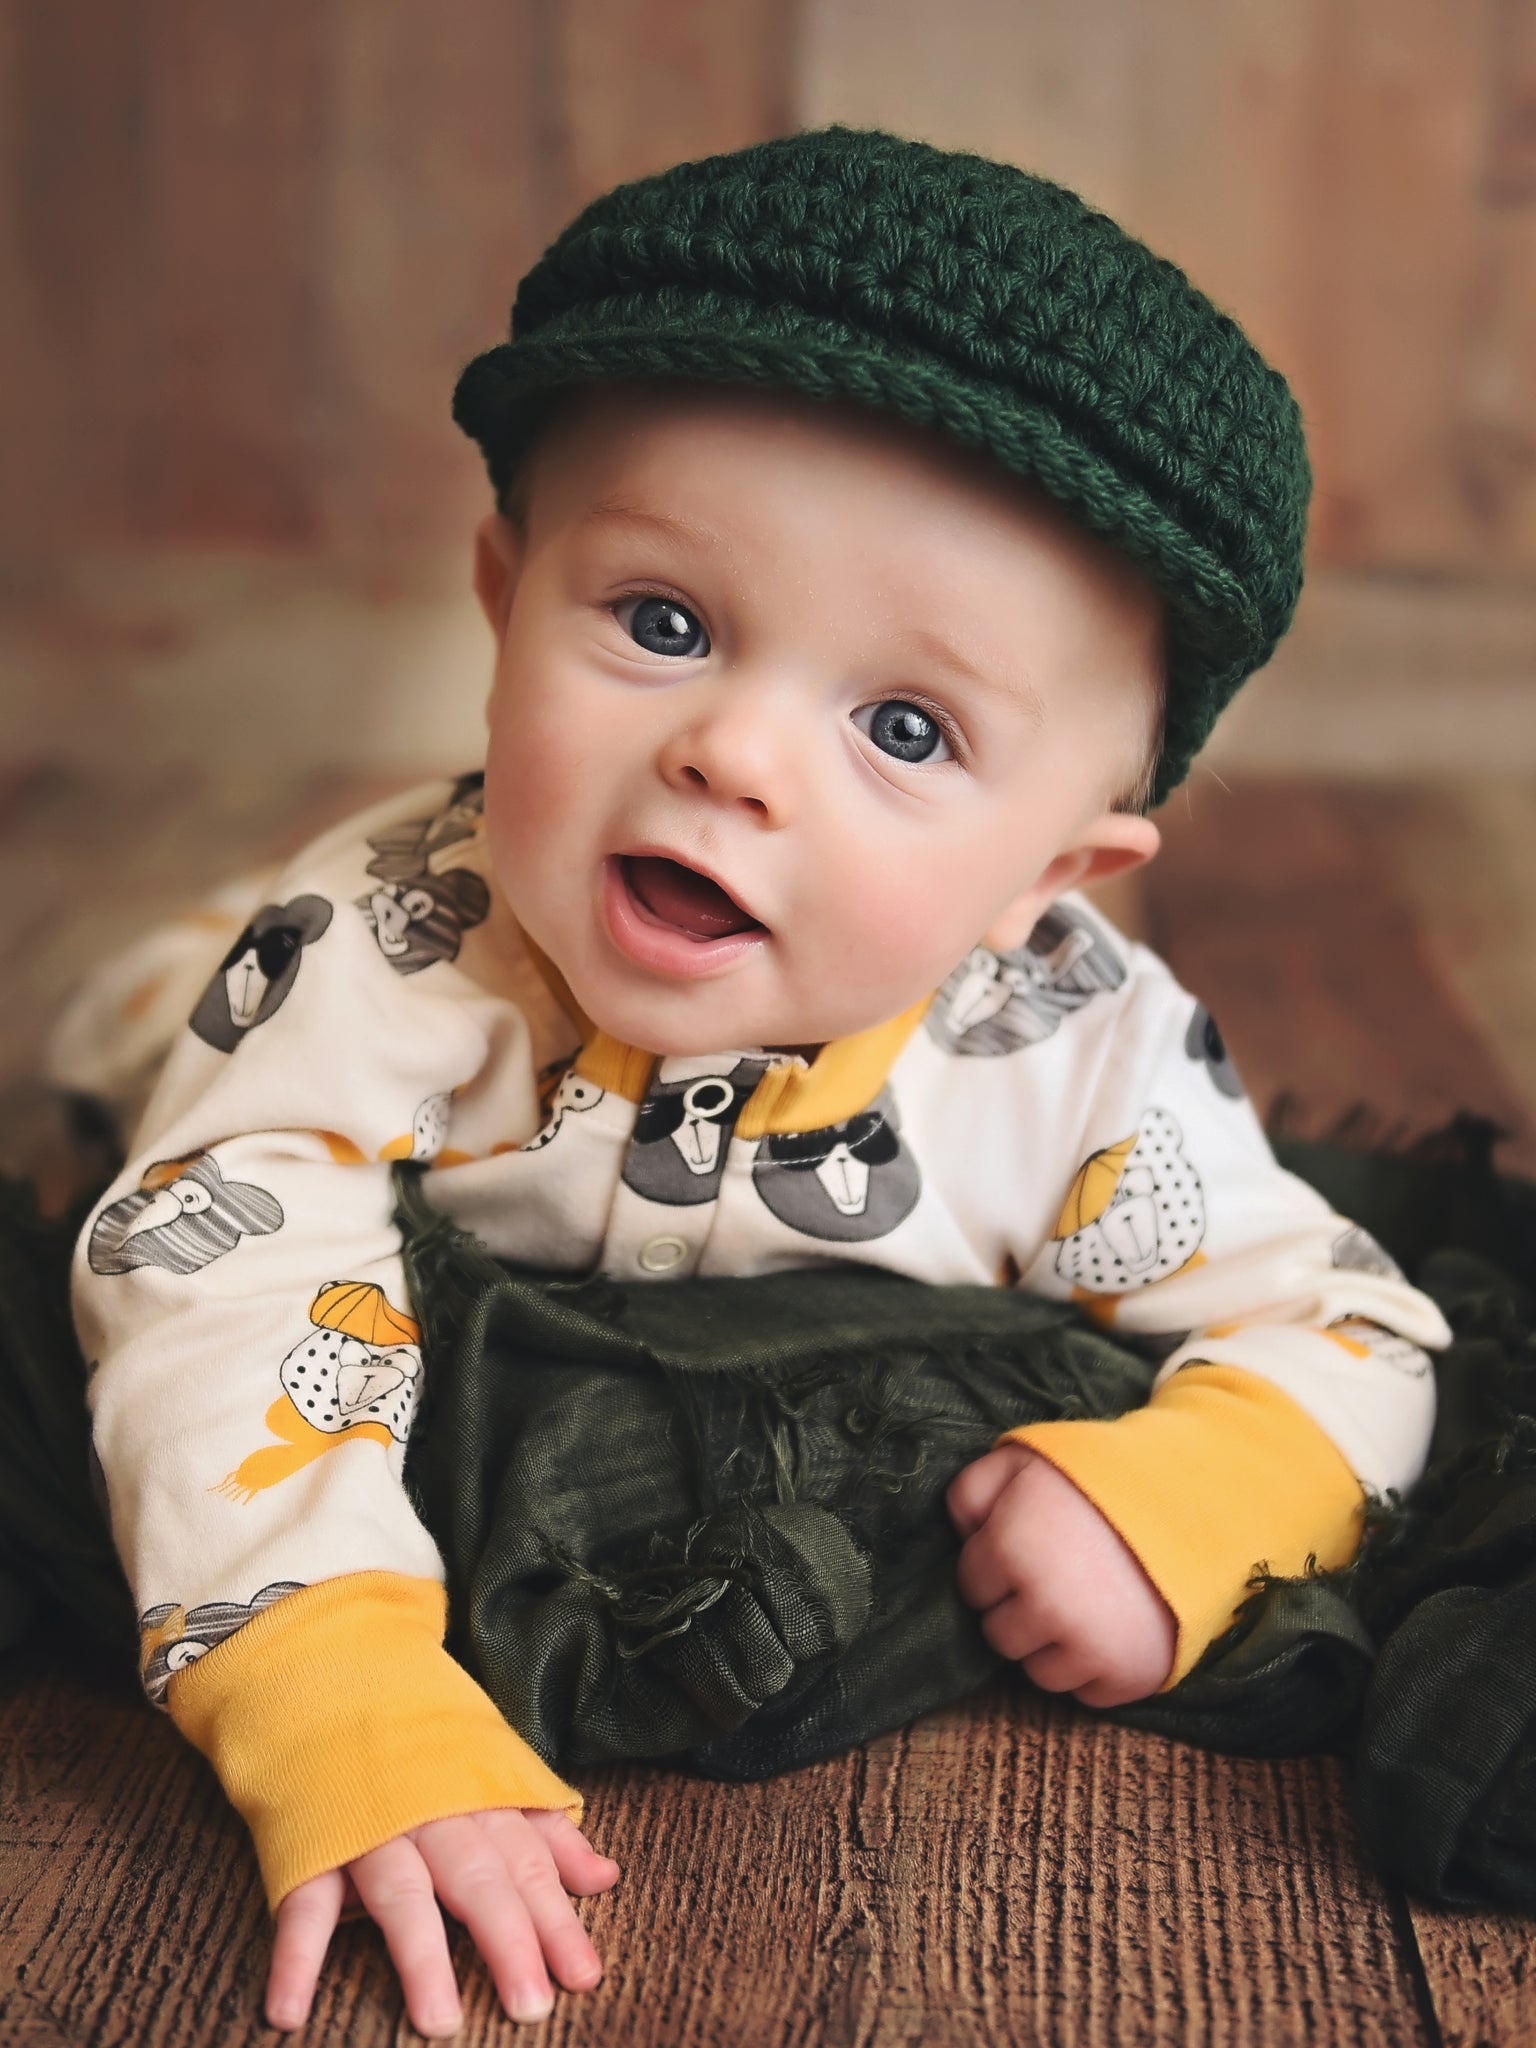 Infant hats